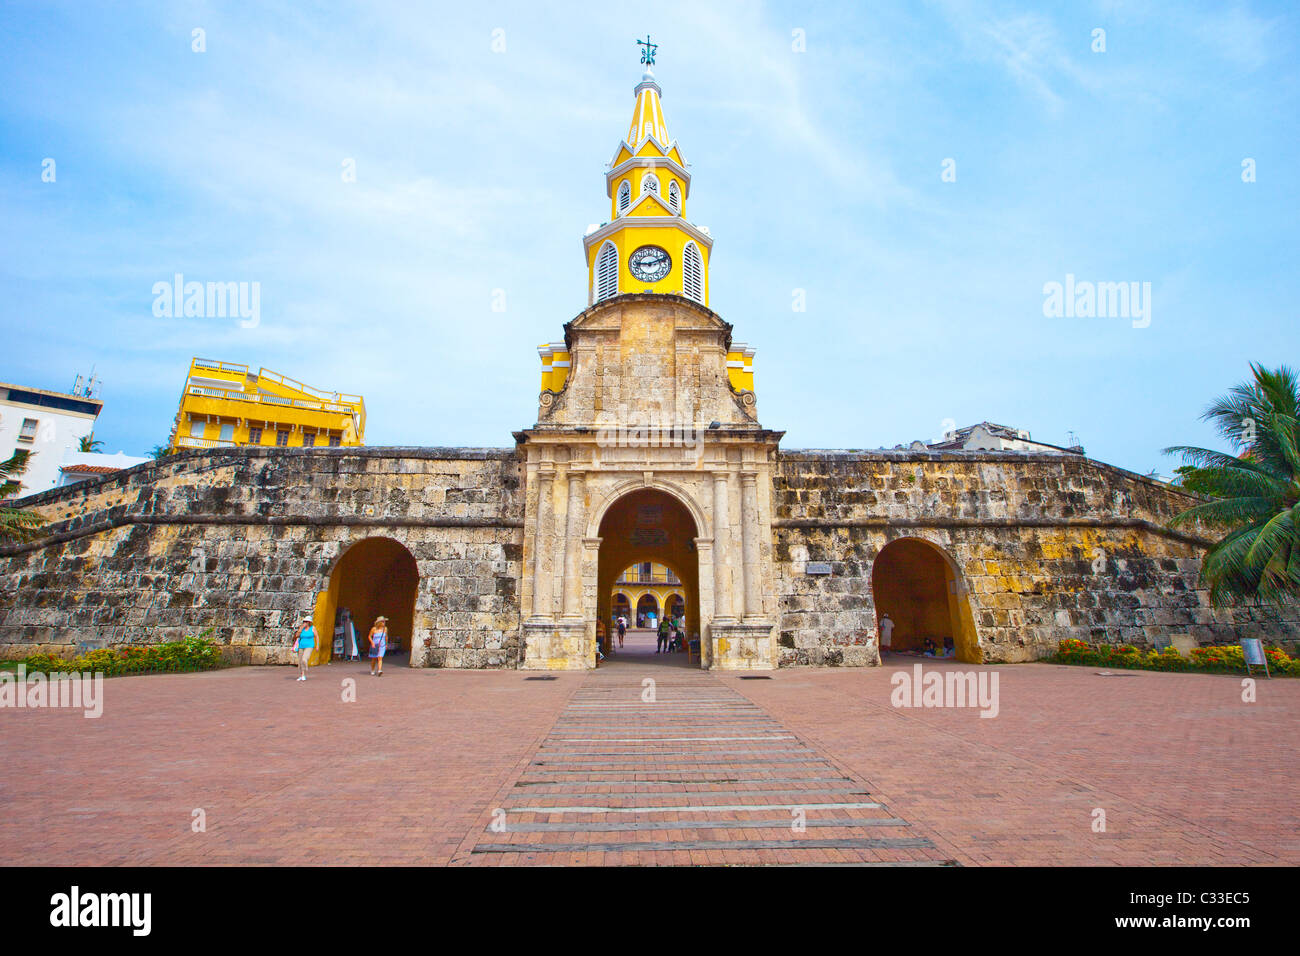 The Clock Tower Gate (or Puerta de Reloj), Cartagena, Colombia Stock Photo